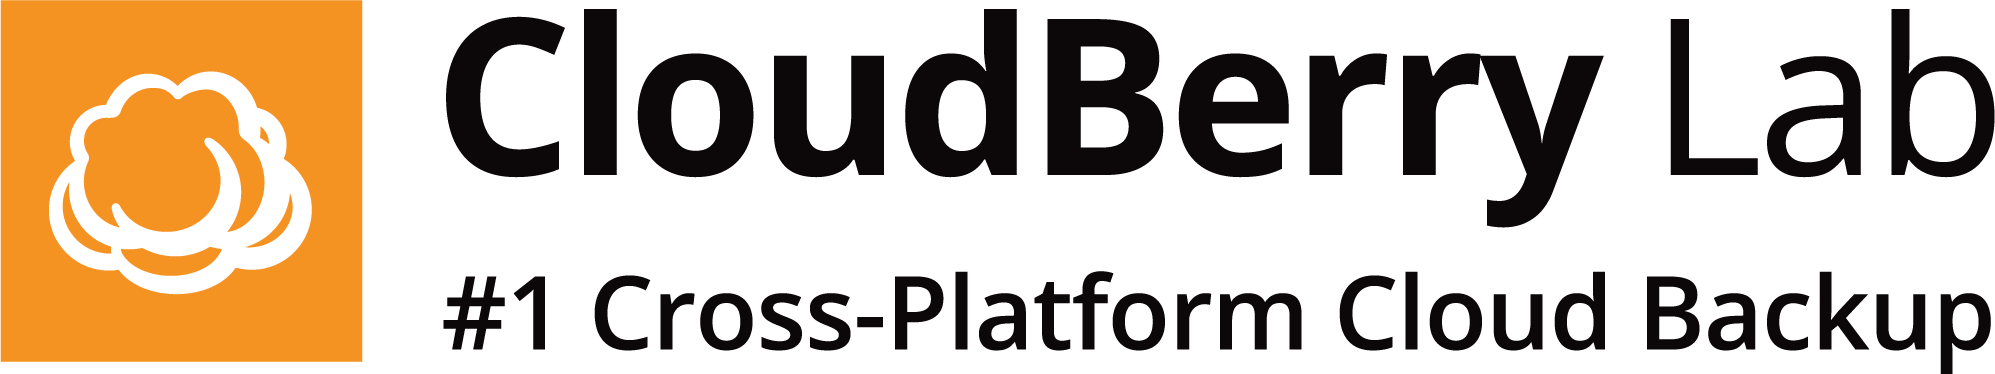 CloudBerry Lab logo